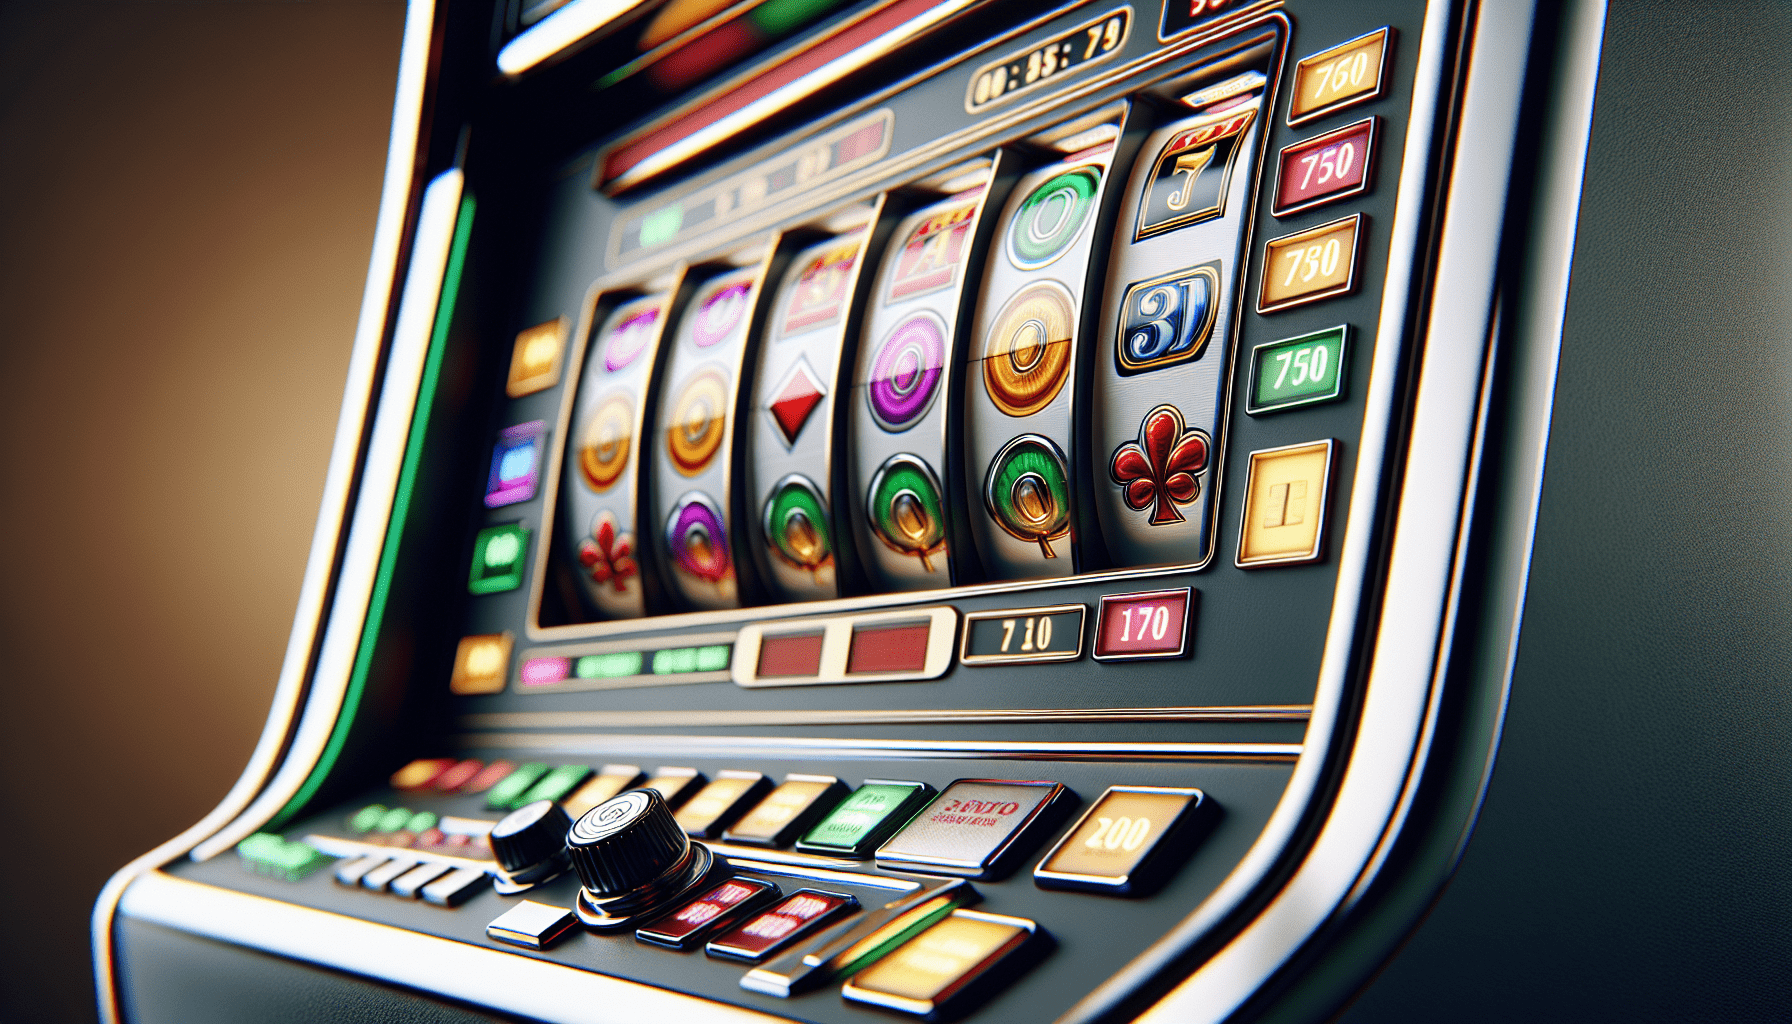 Do Casinos Really Control The Slot Machines?